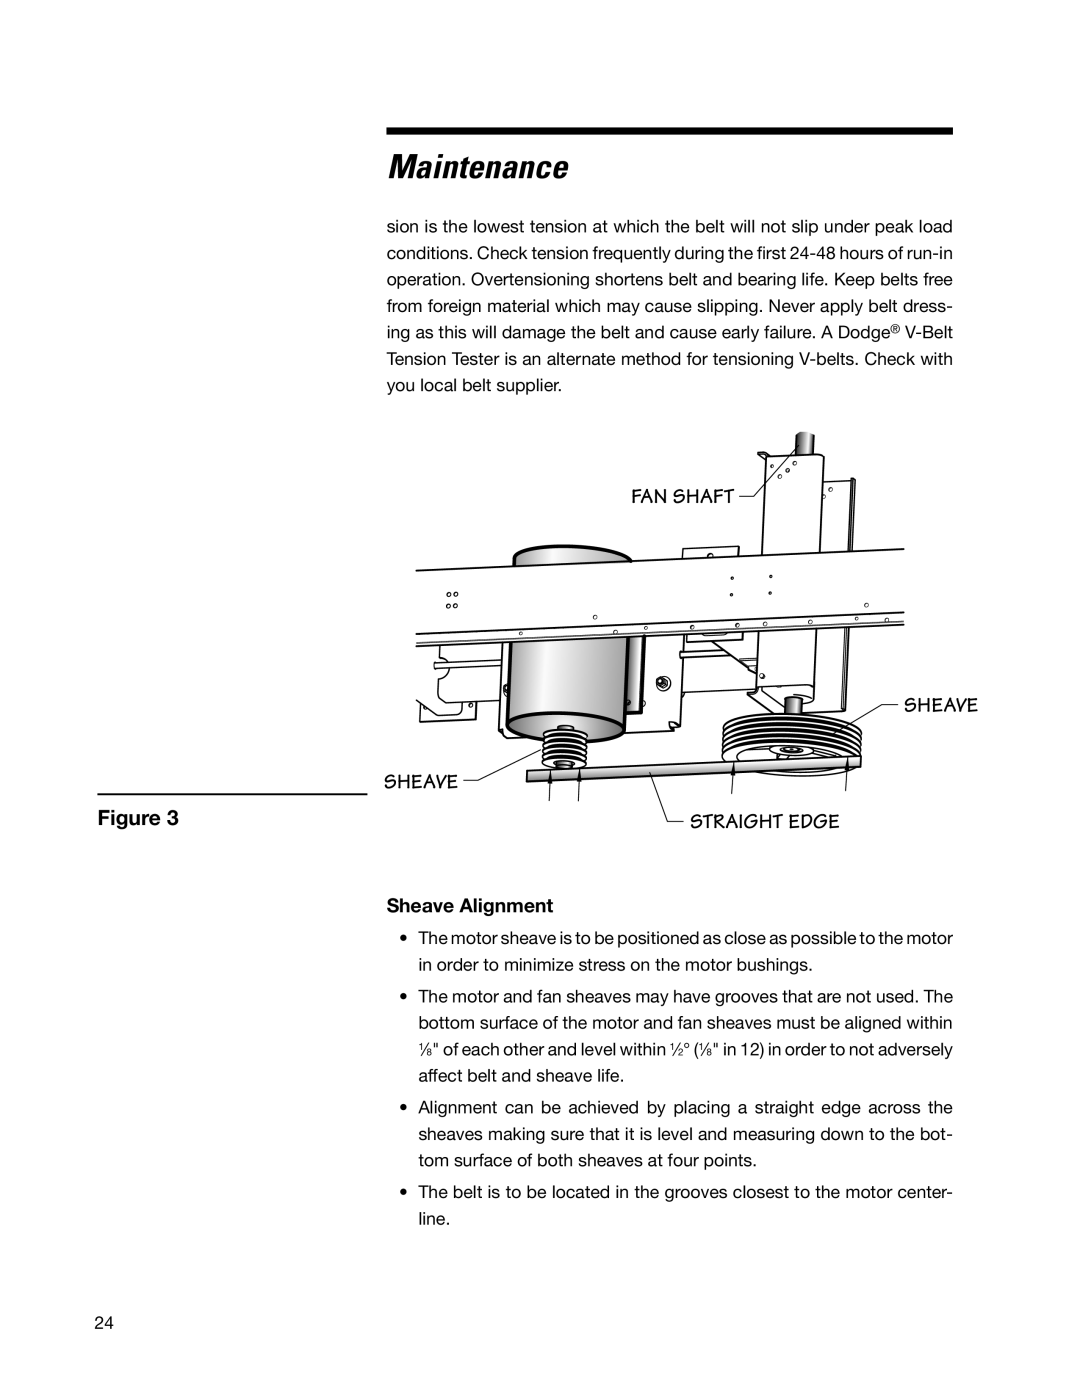 SPX Cooling Technologies Marley MH Fluid Cooler user manual Sheave Alignment, Maintenance, Fan Shaft Sheave, Straight Edge 